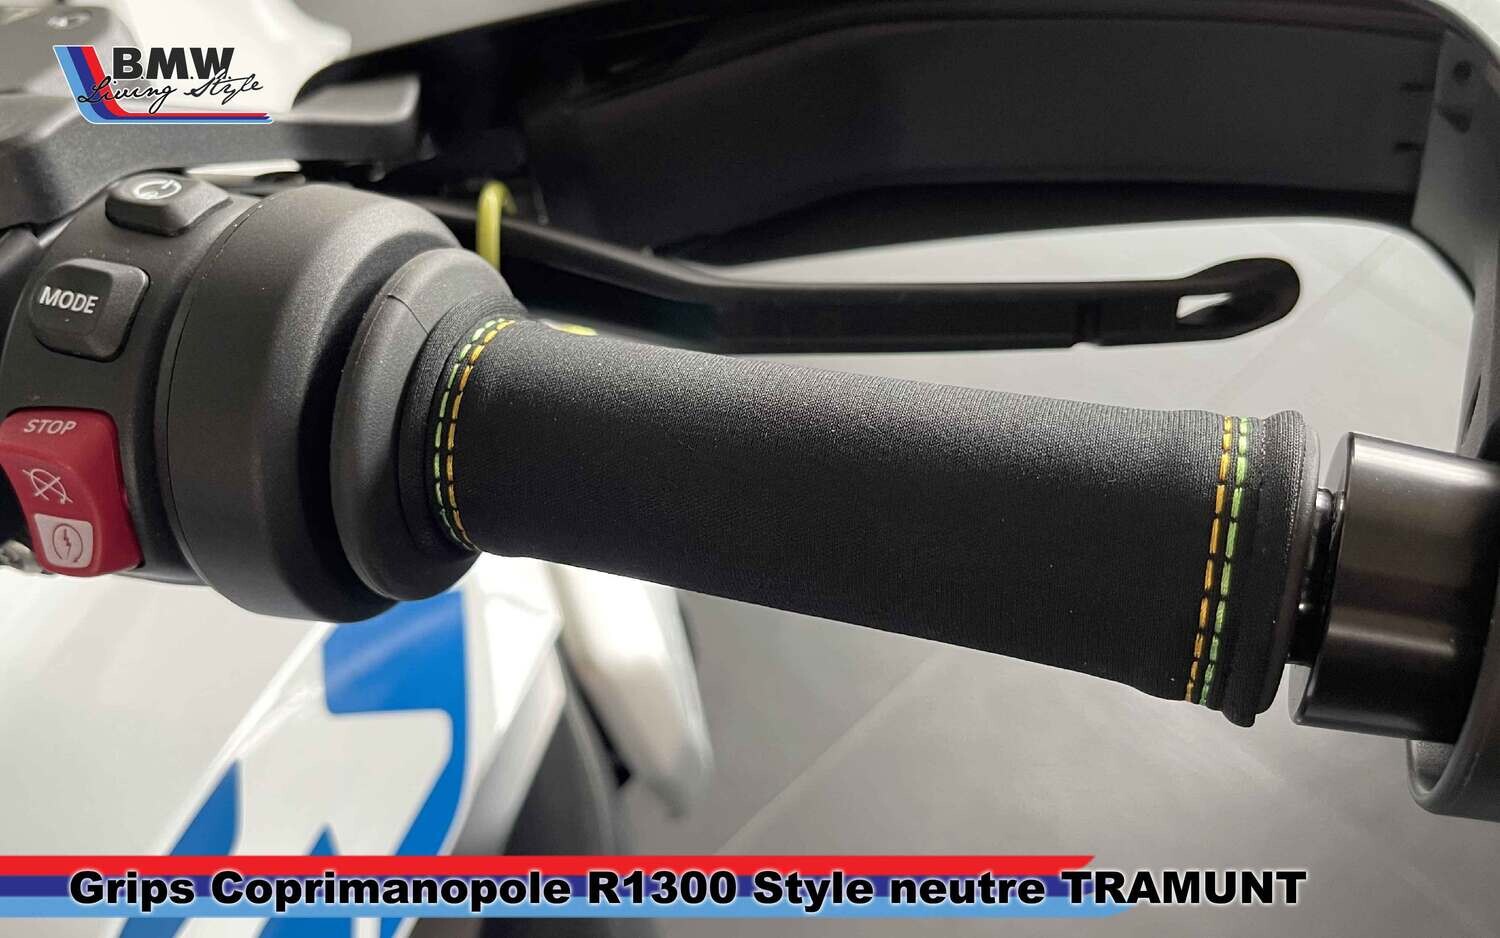 Coprimanopole TRAMUNT R1300 GS Neutre